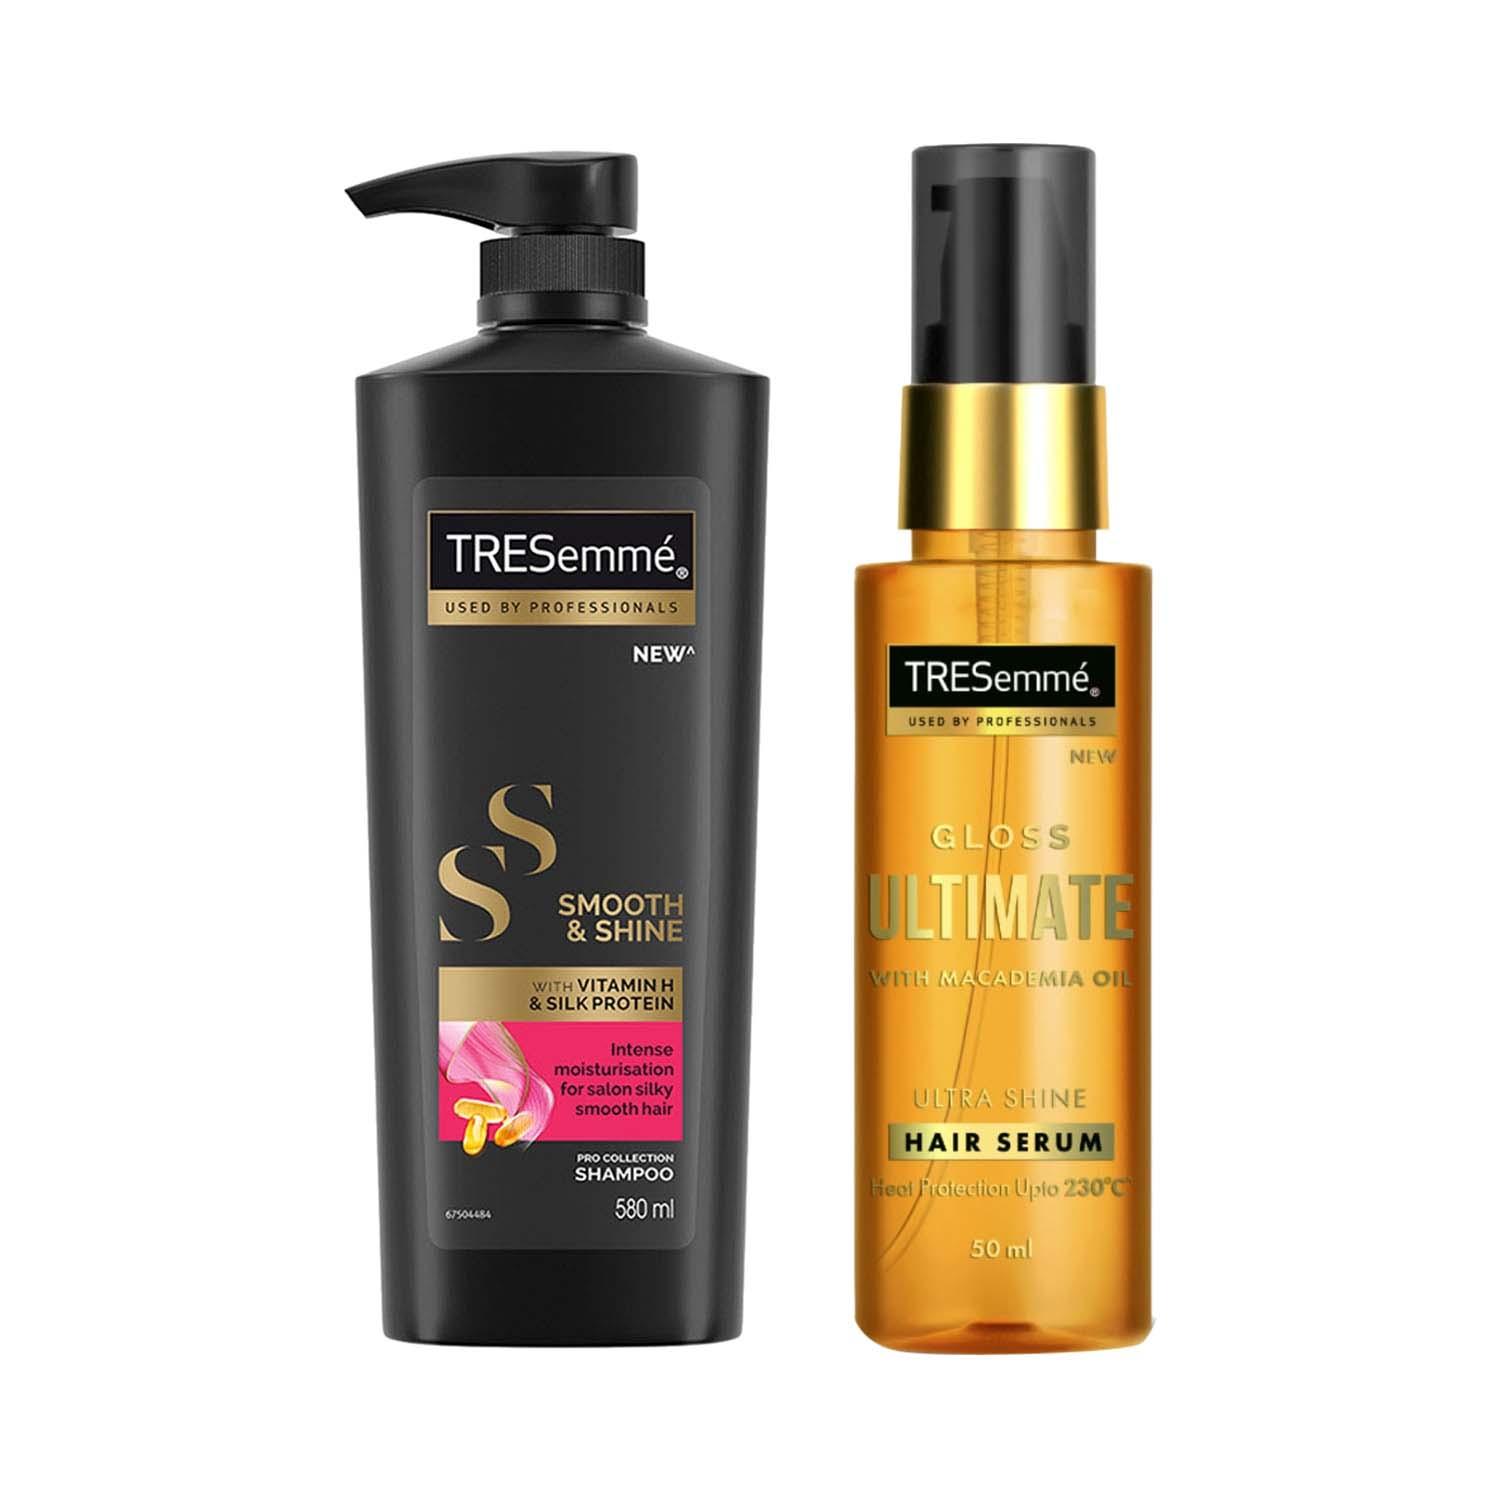 Tresemme | Tresemme XL Smooth n Shine Shampoo & Gloss Ultimate Serum Combo